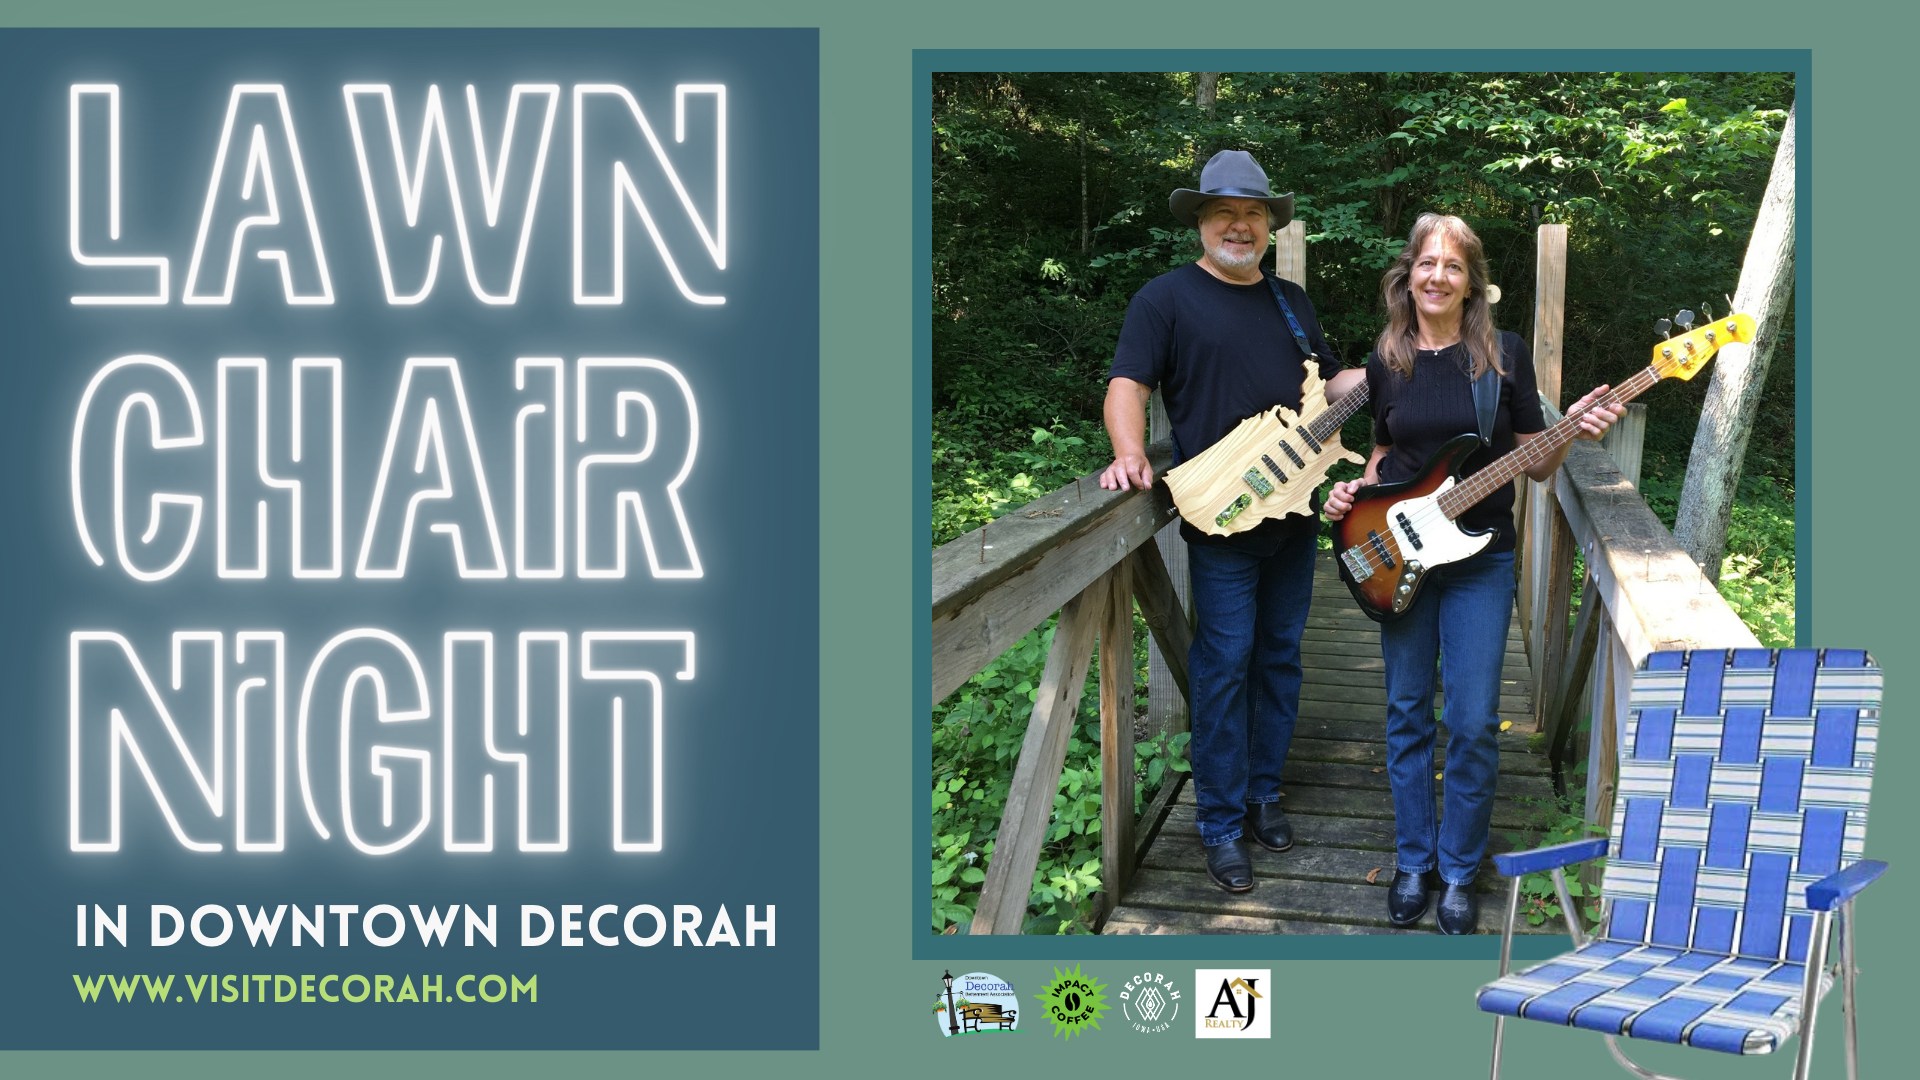 Lawn Chair Night in Downtown Decorah: Buck Hollow Band thumbnail